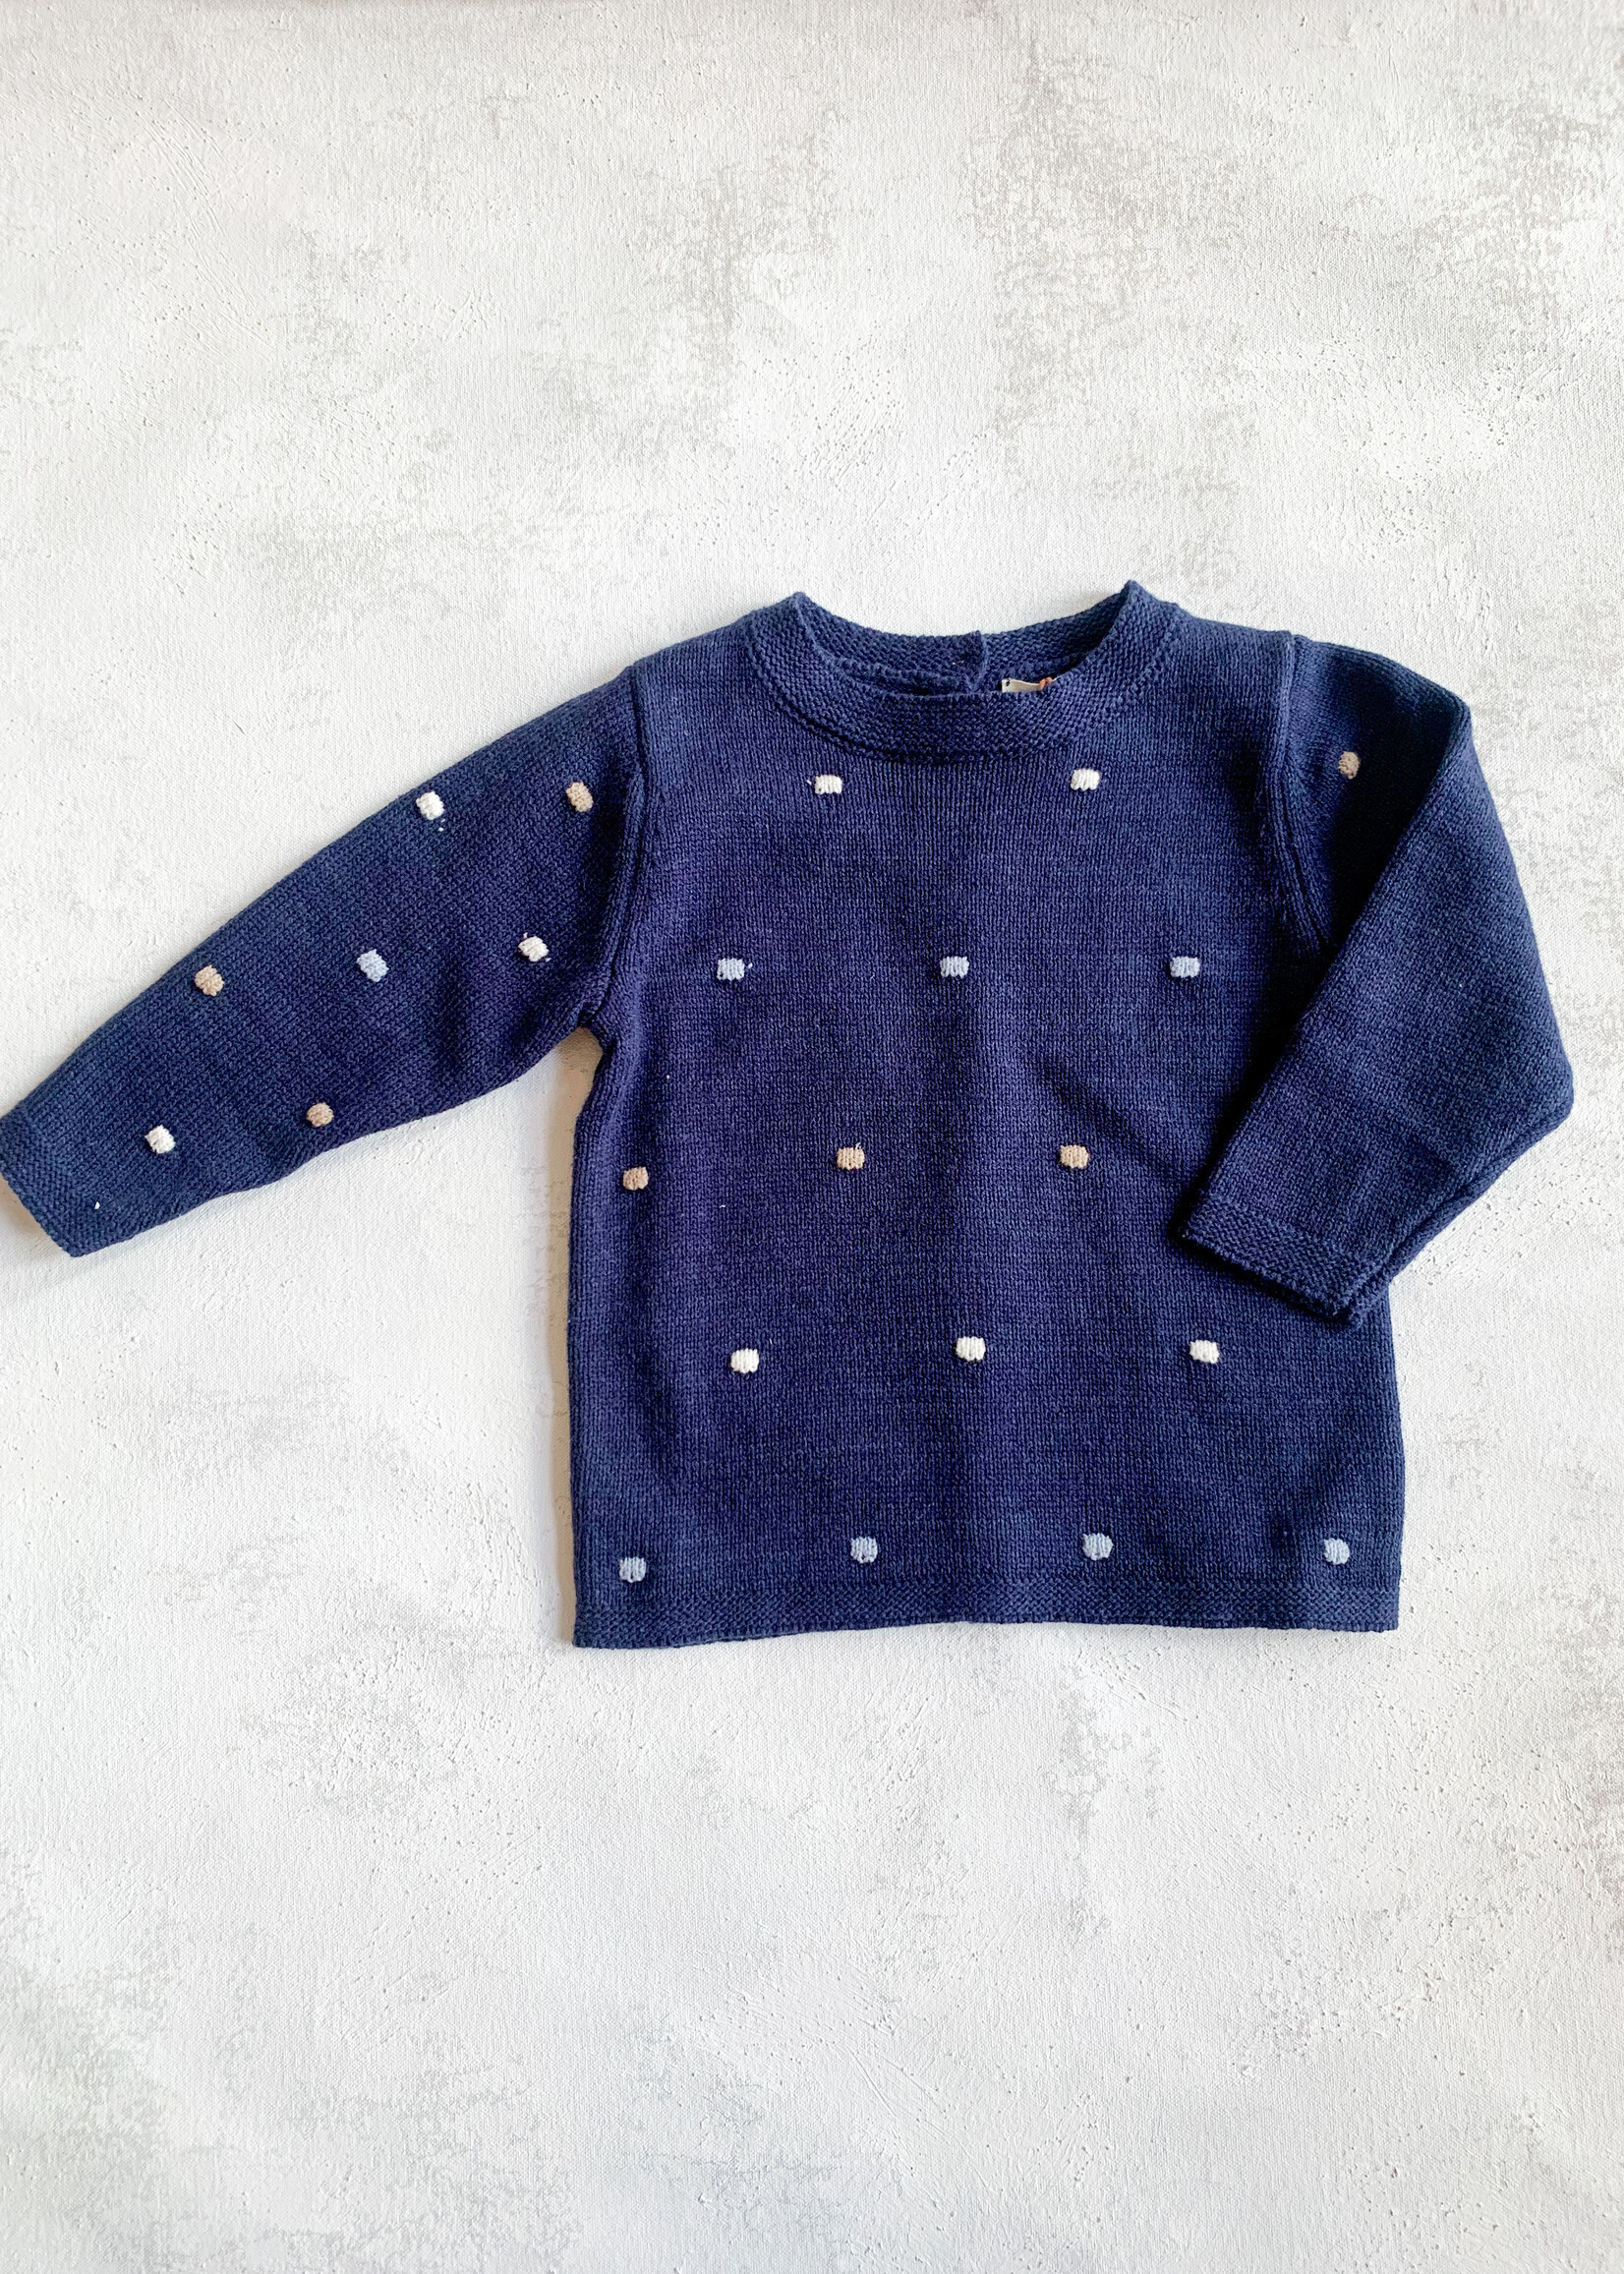 Elitaire Petite Isolde Navy Dot Sweater